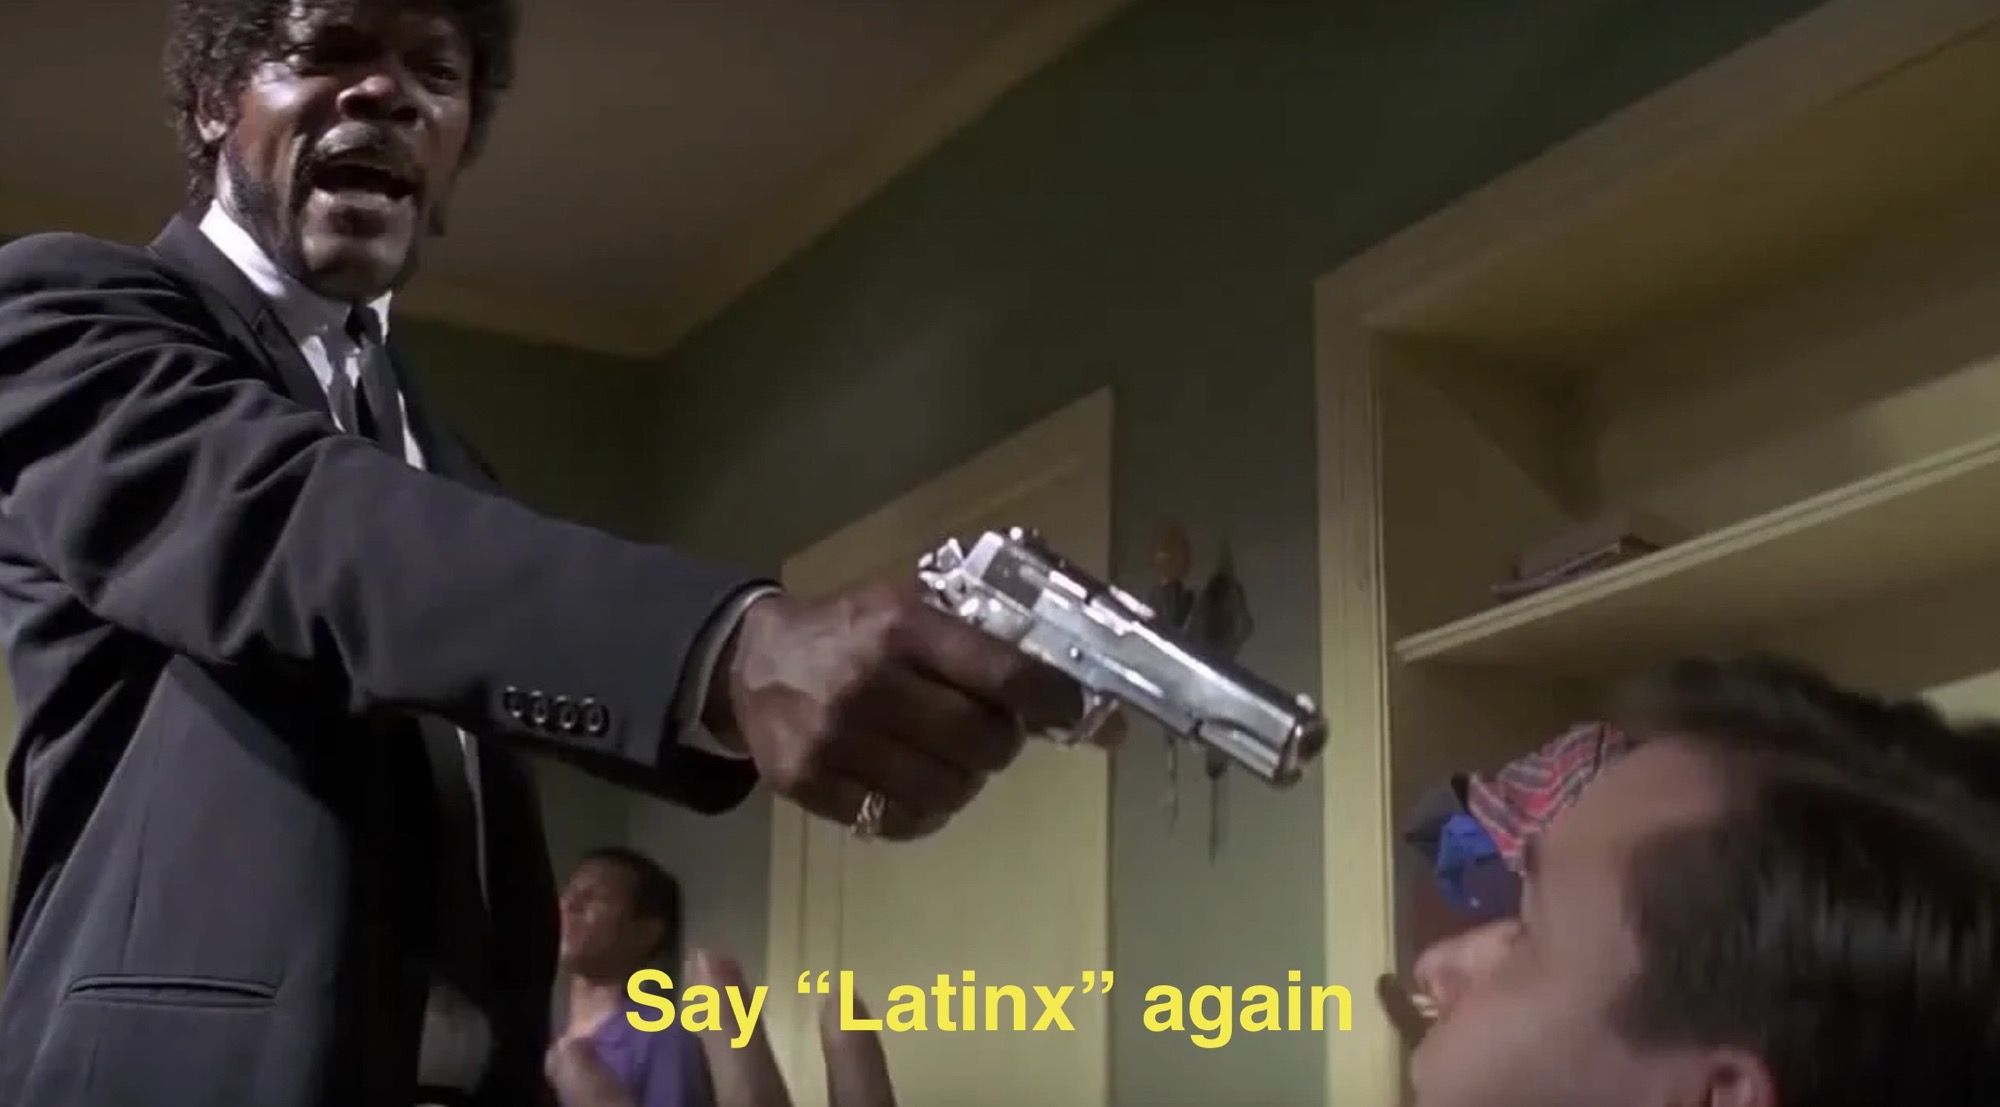 Latinos who were born in Latin America when they hear a gringo say “Latinx”